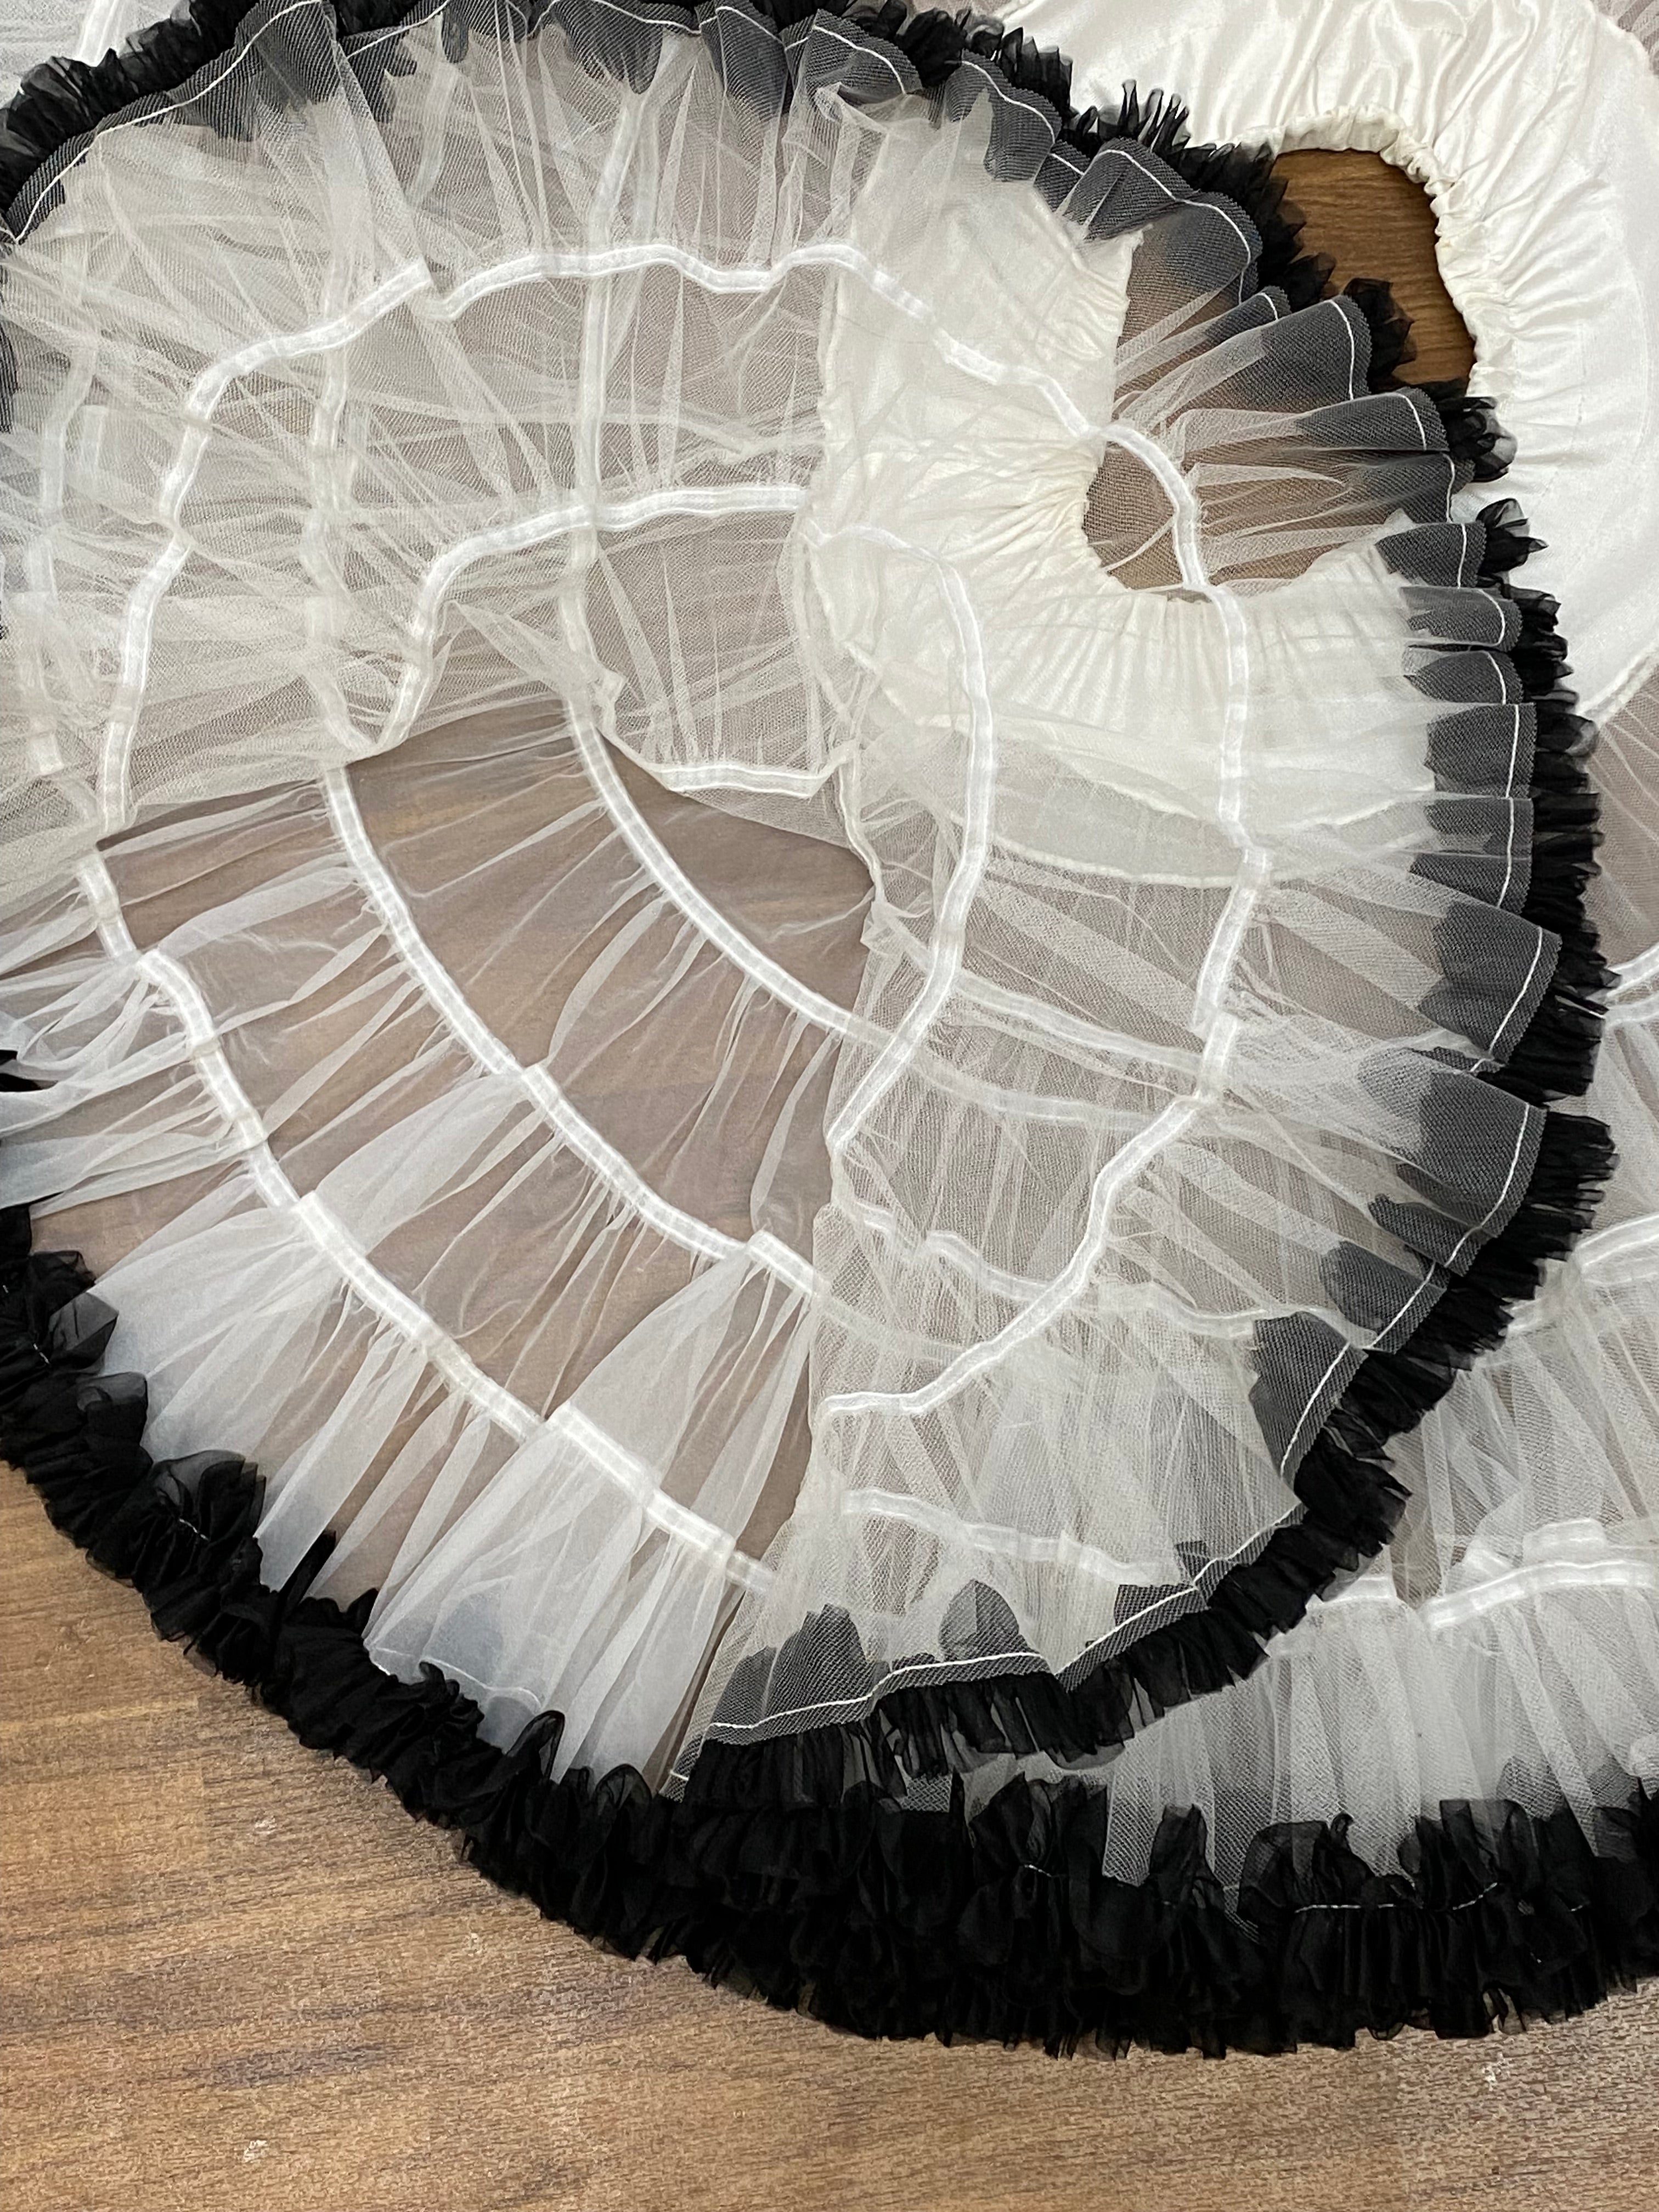 Petticoat Black and White Gr.S-Gr.M